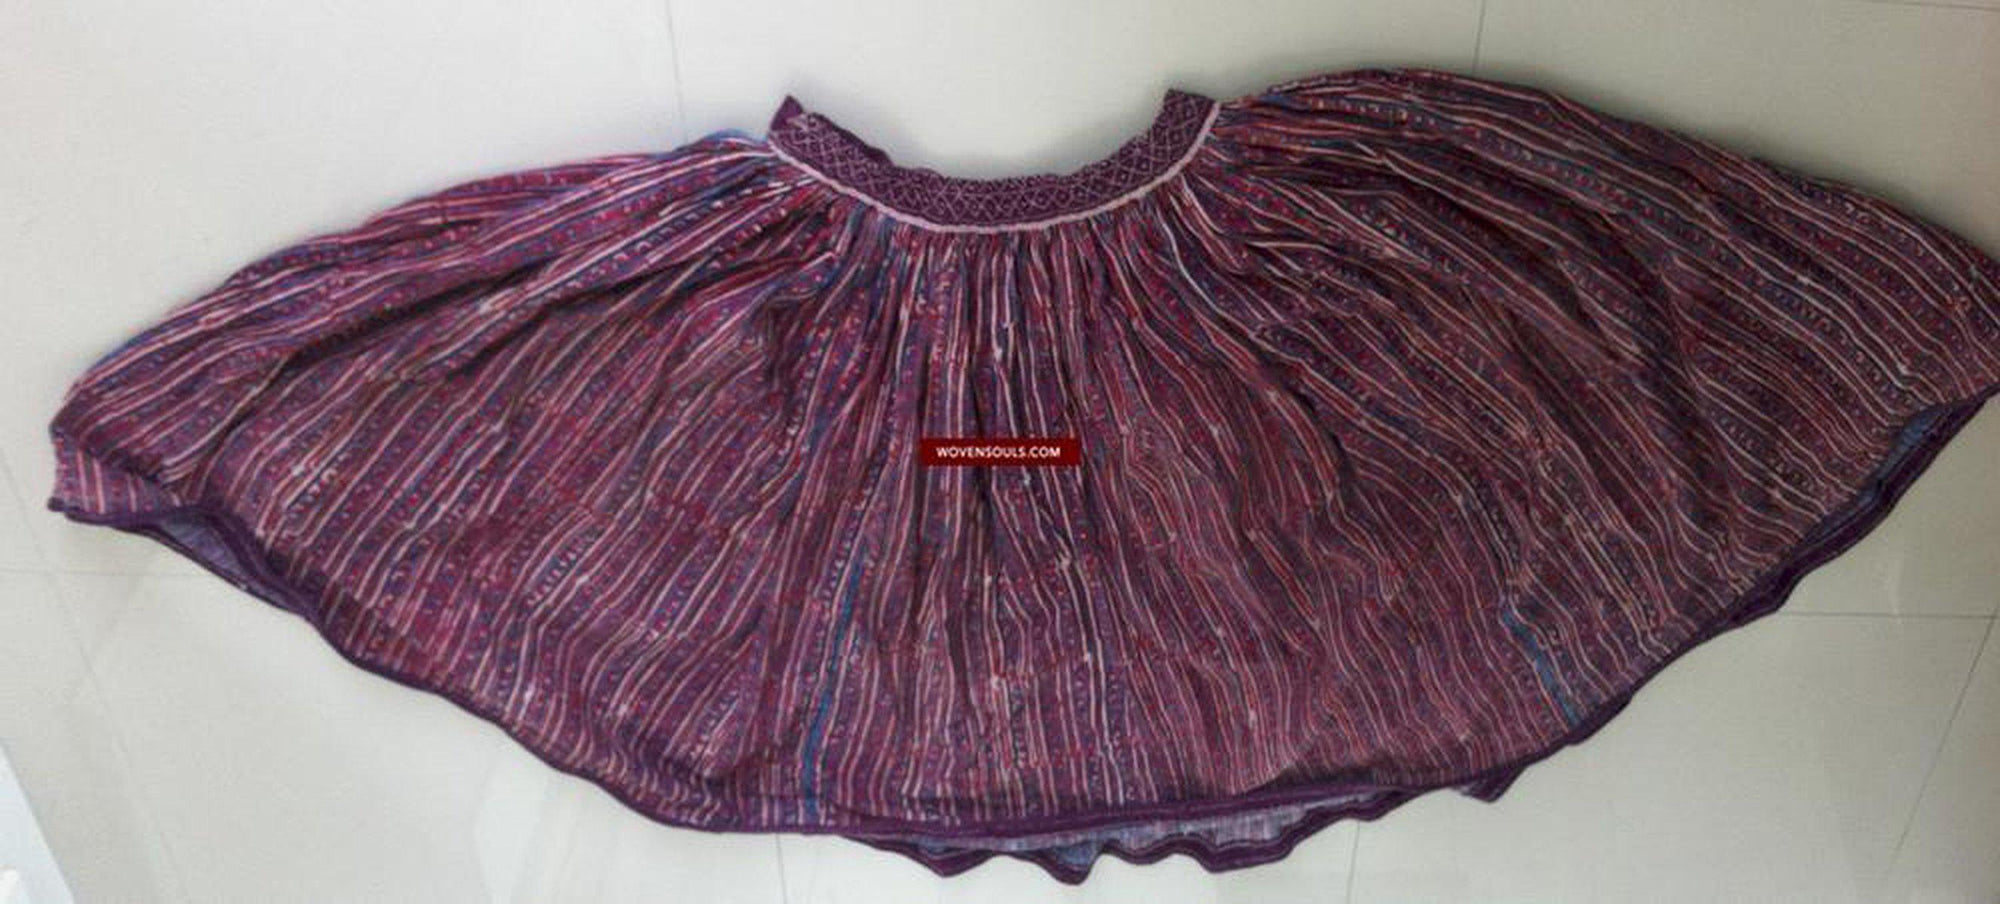 161 SOLD Hand Printed Skirt Gujarat-WOVENSOULS-Antique-Vintage-Textiles-Art-Decor